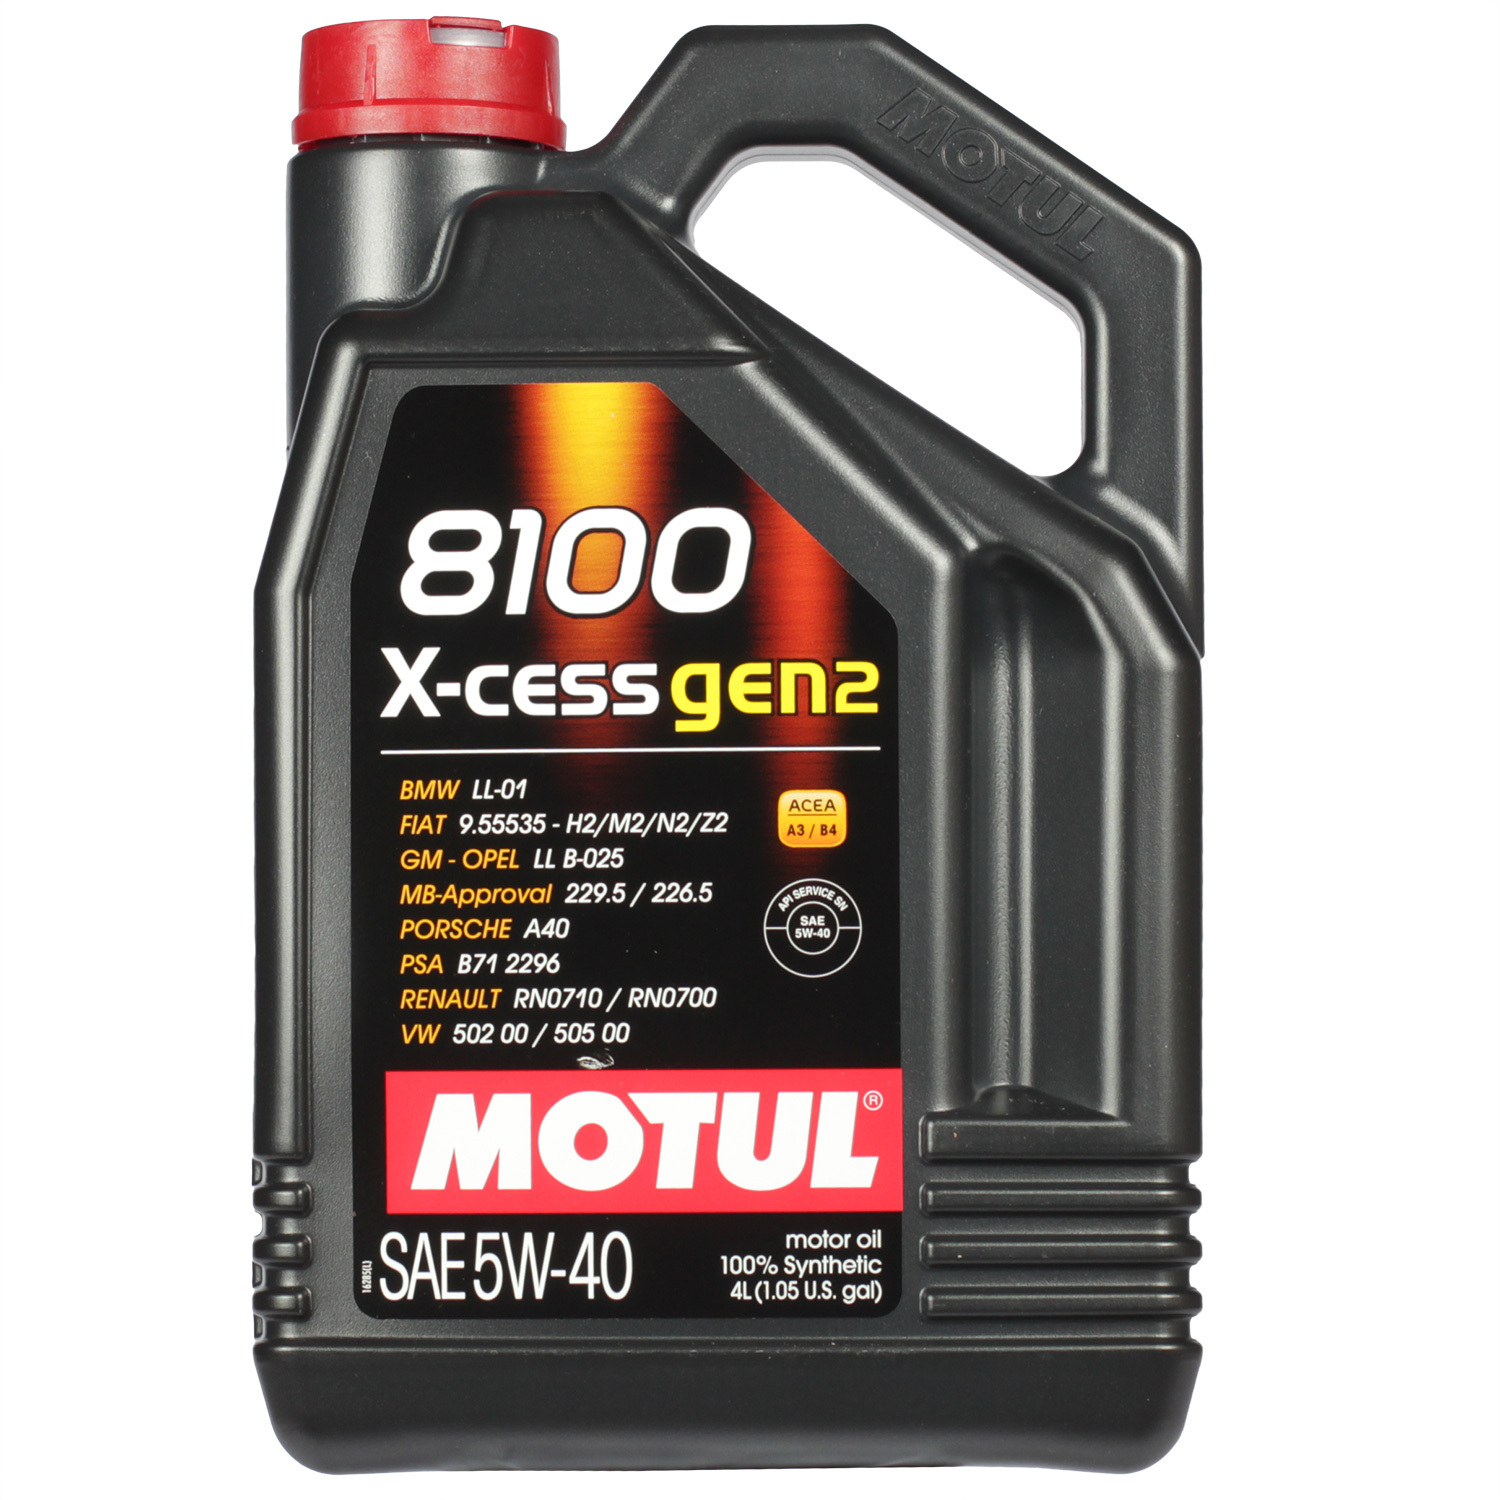 Motul Моторное масло Motul 8100 X-cess gen2 5W-40, 4 л